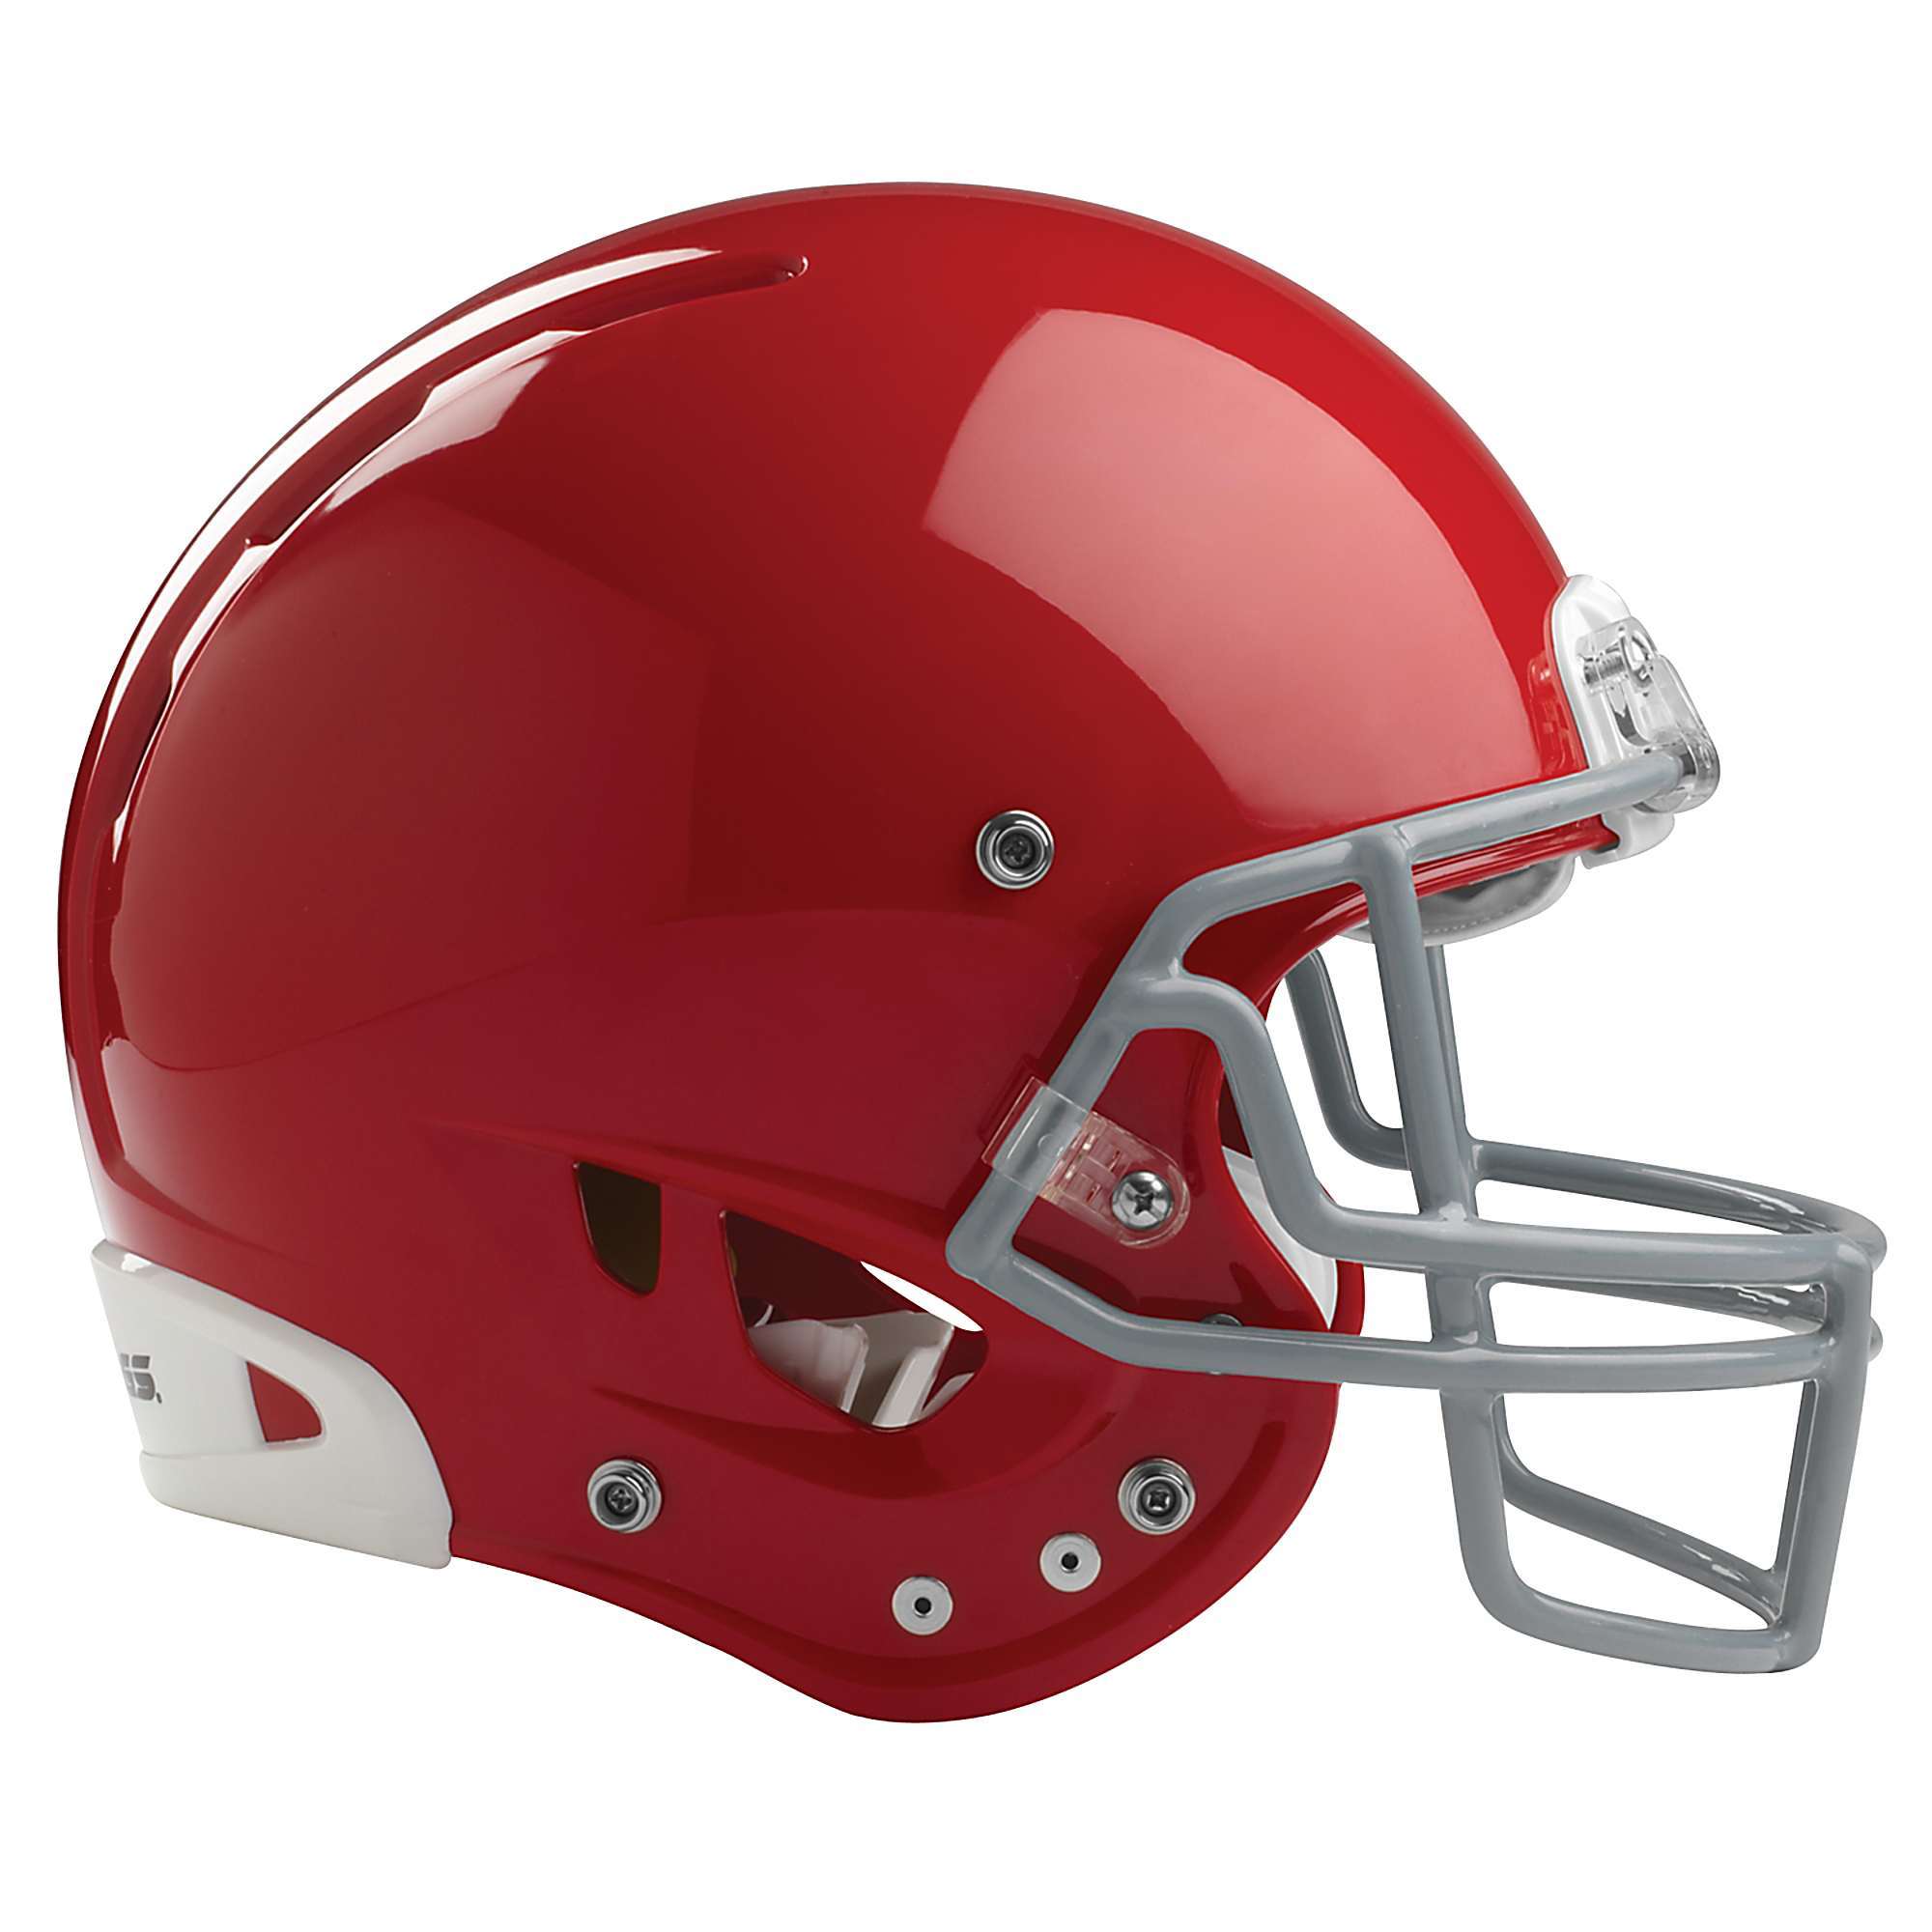 New 2015 Rawlings NRG Impulse helmet/facemask red small adult faceguard football 